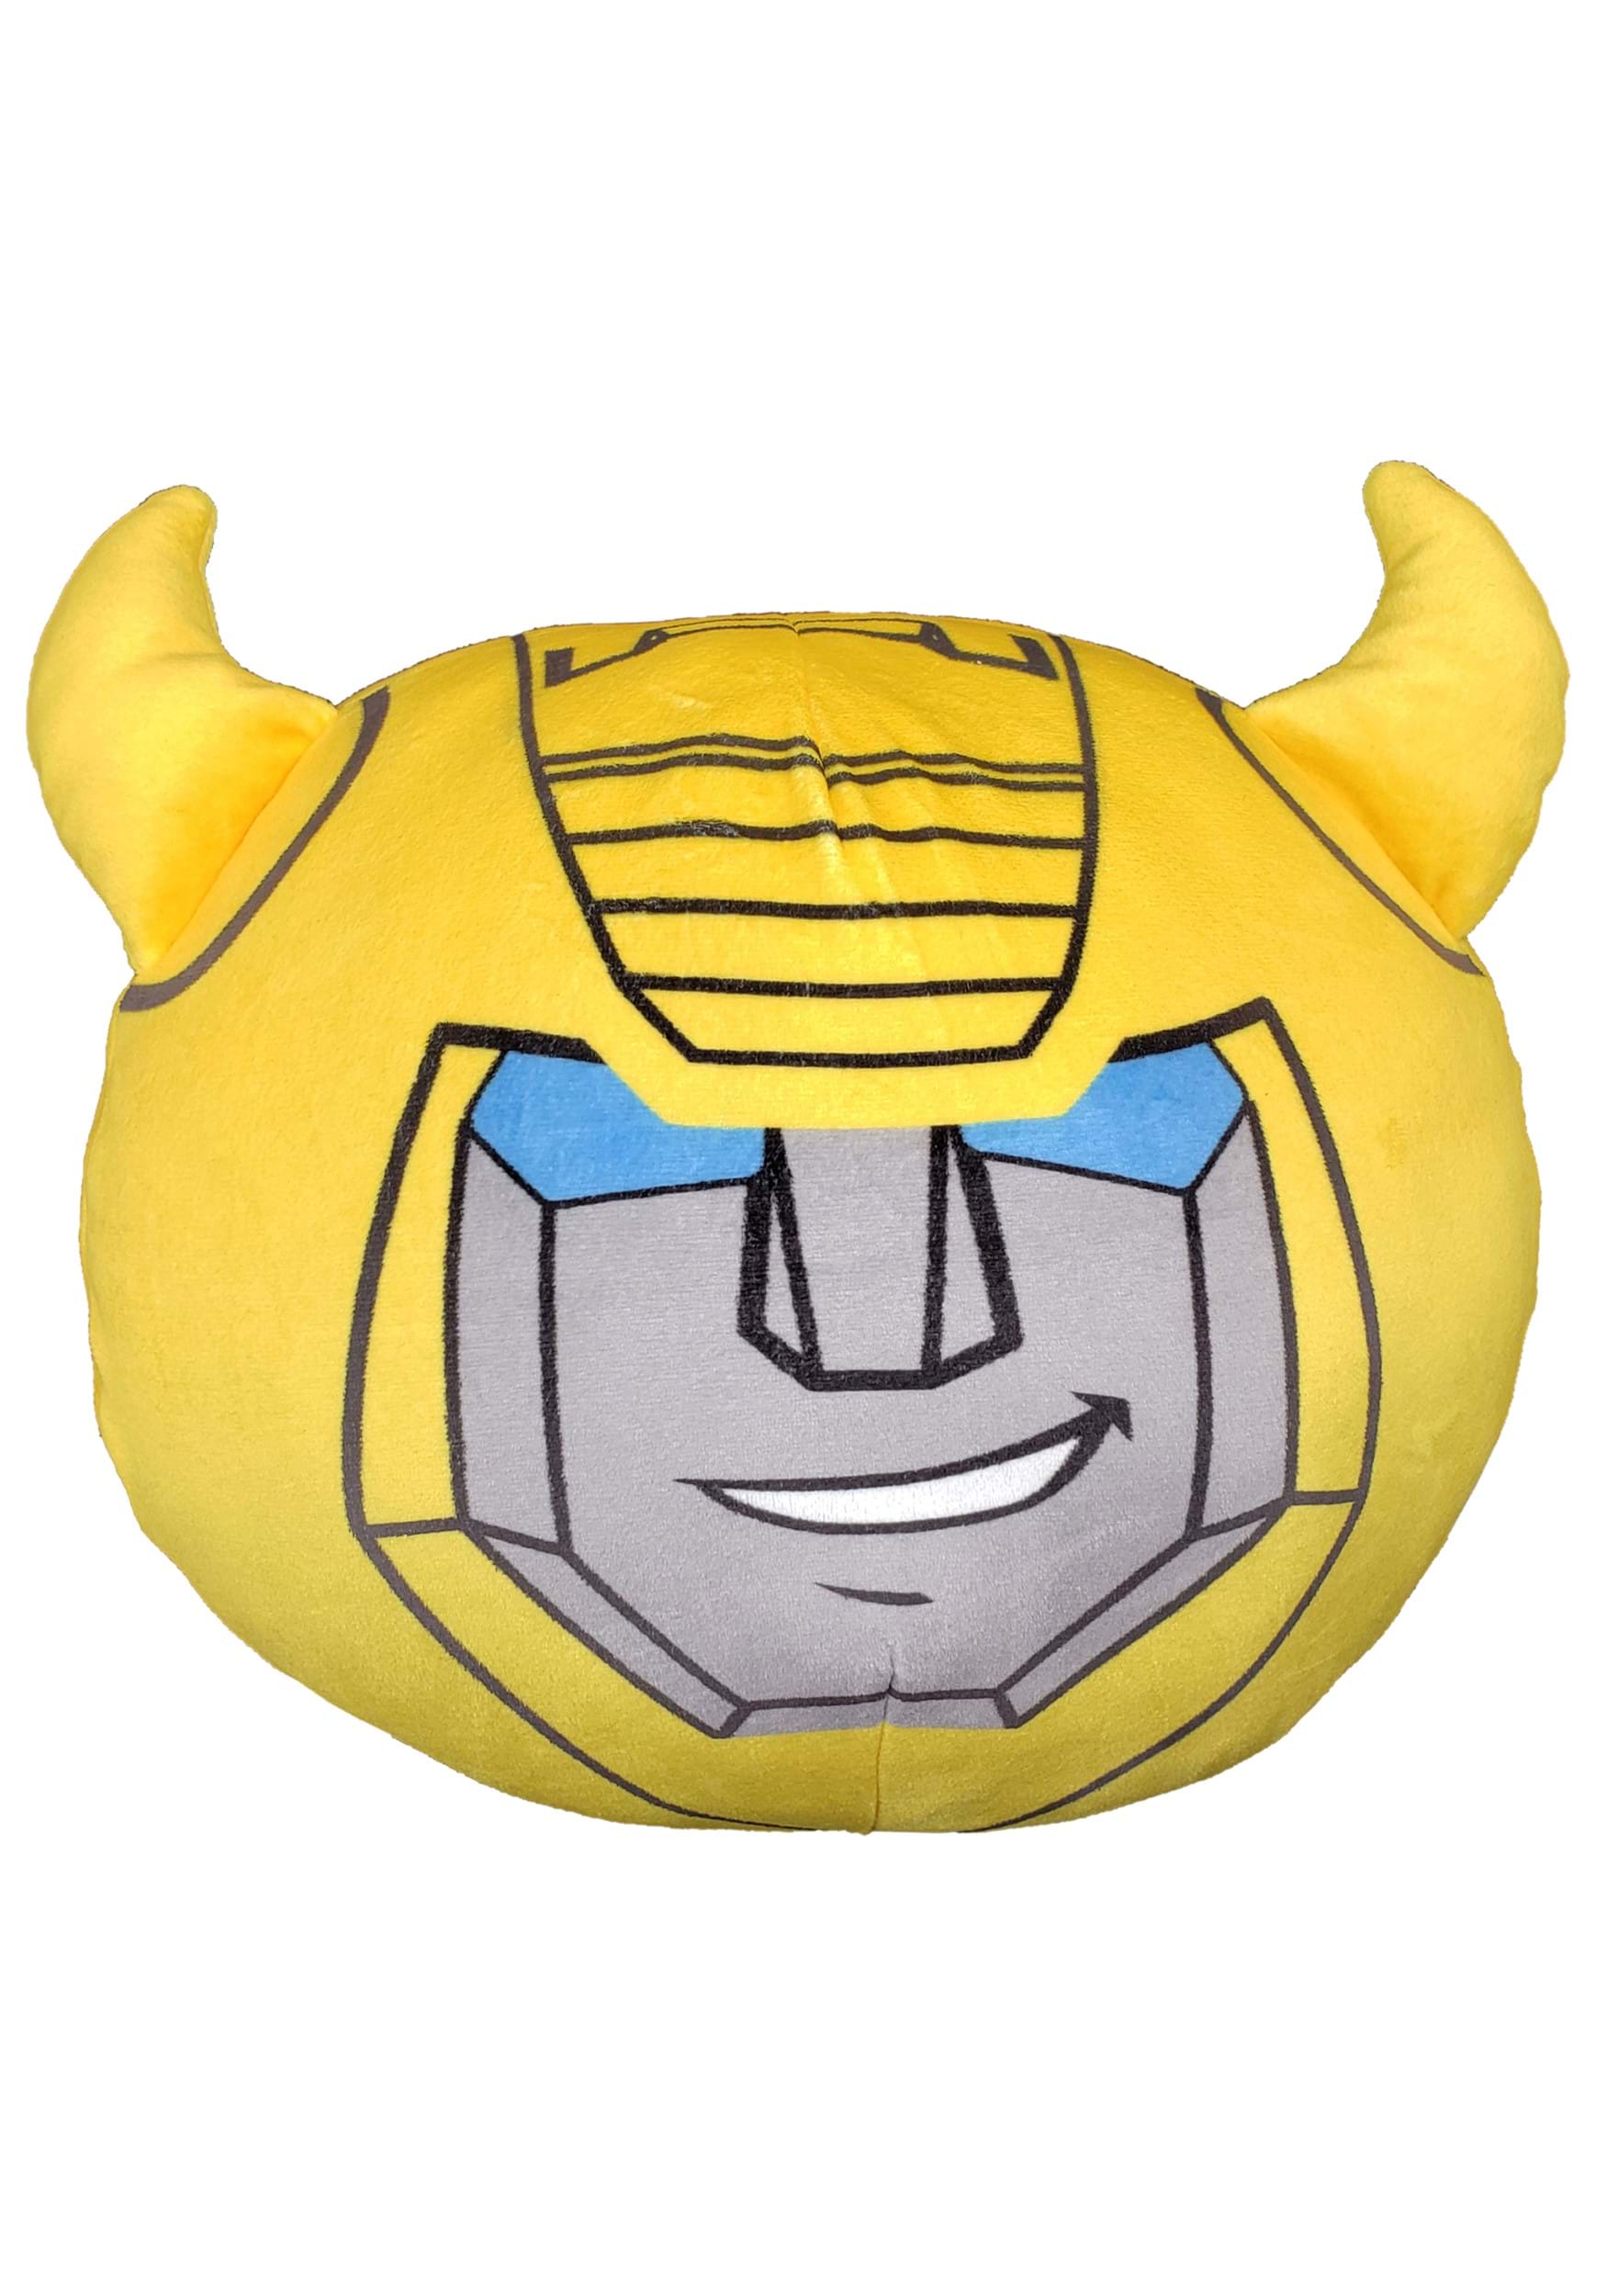 Transformers BumbleBee Smile Plush Cloud Pillow